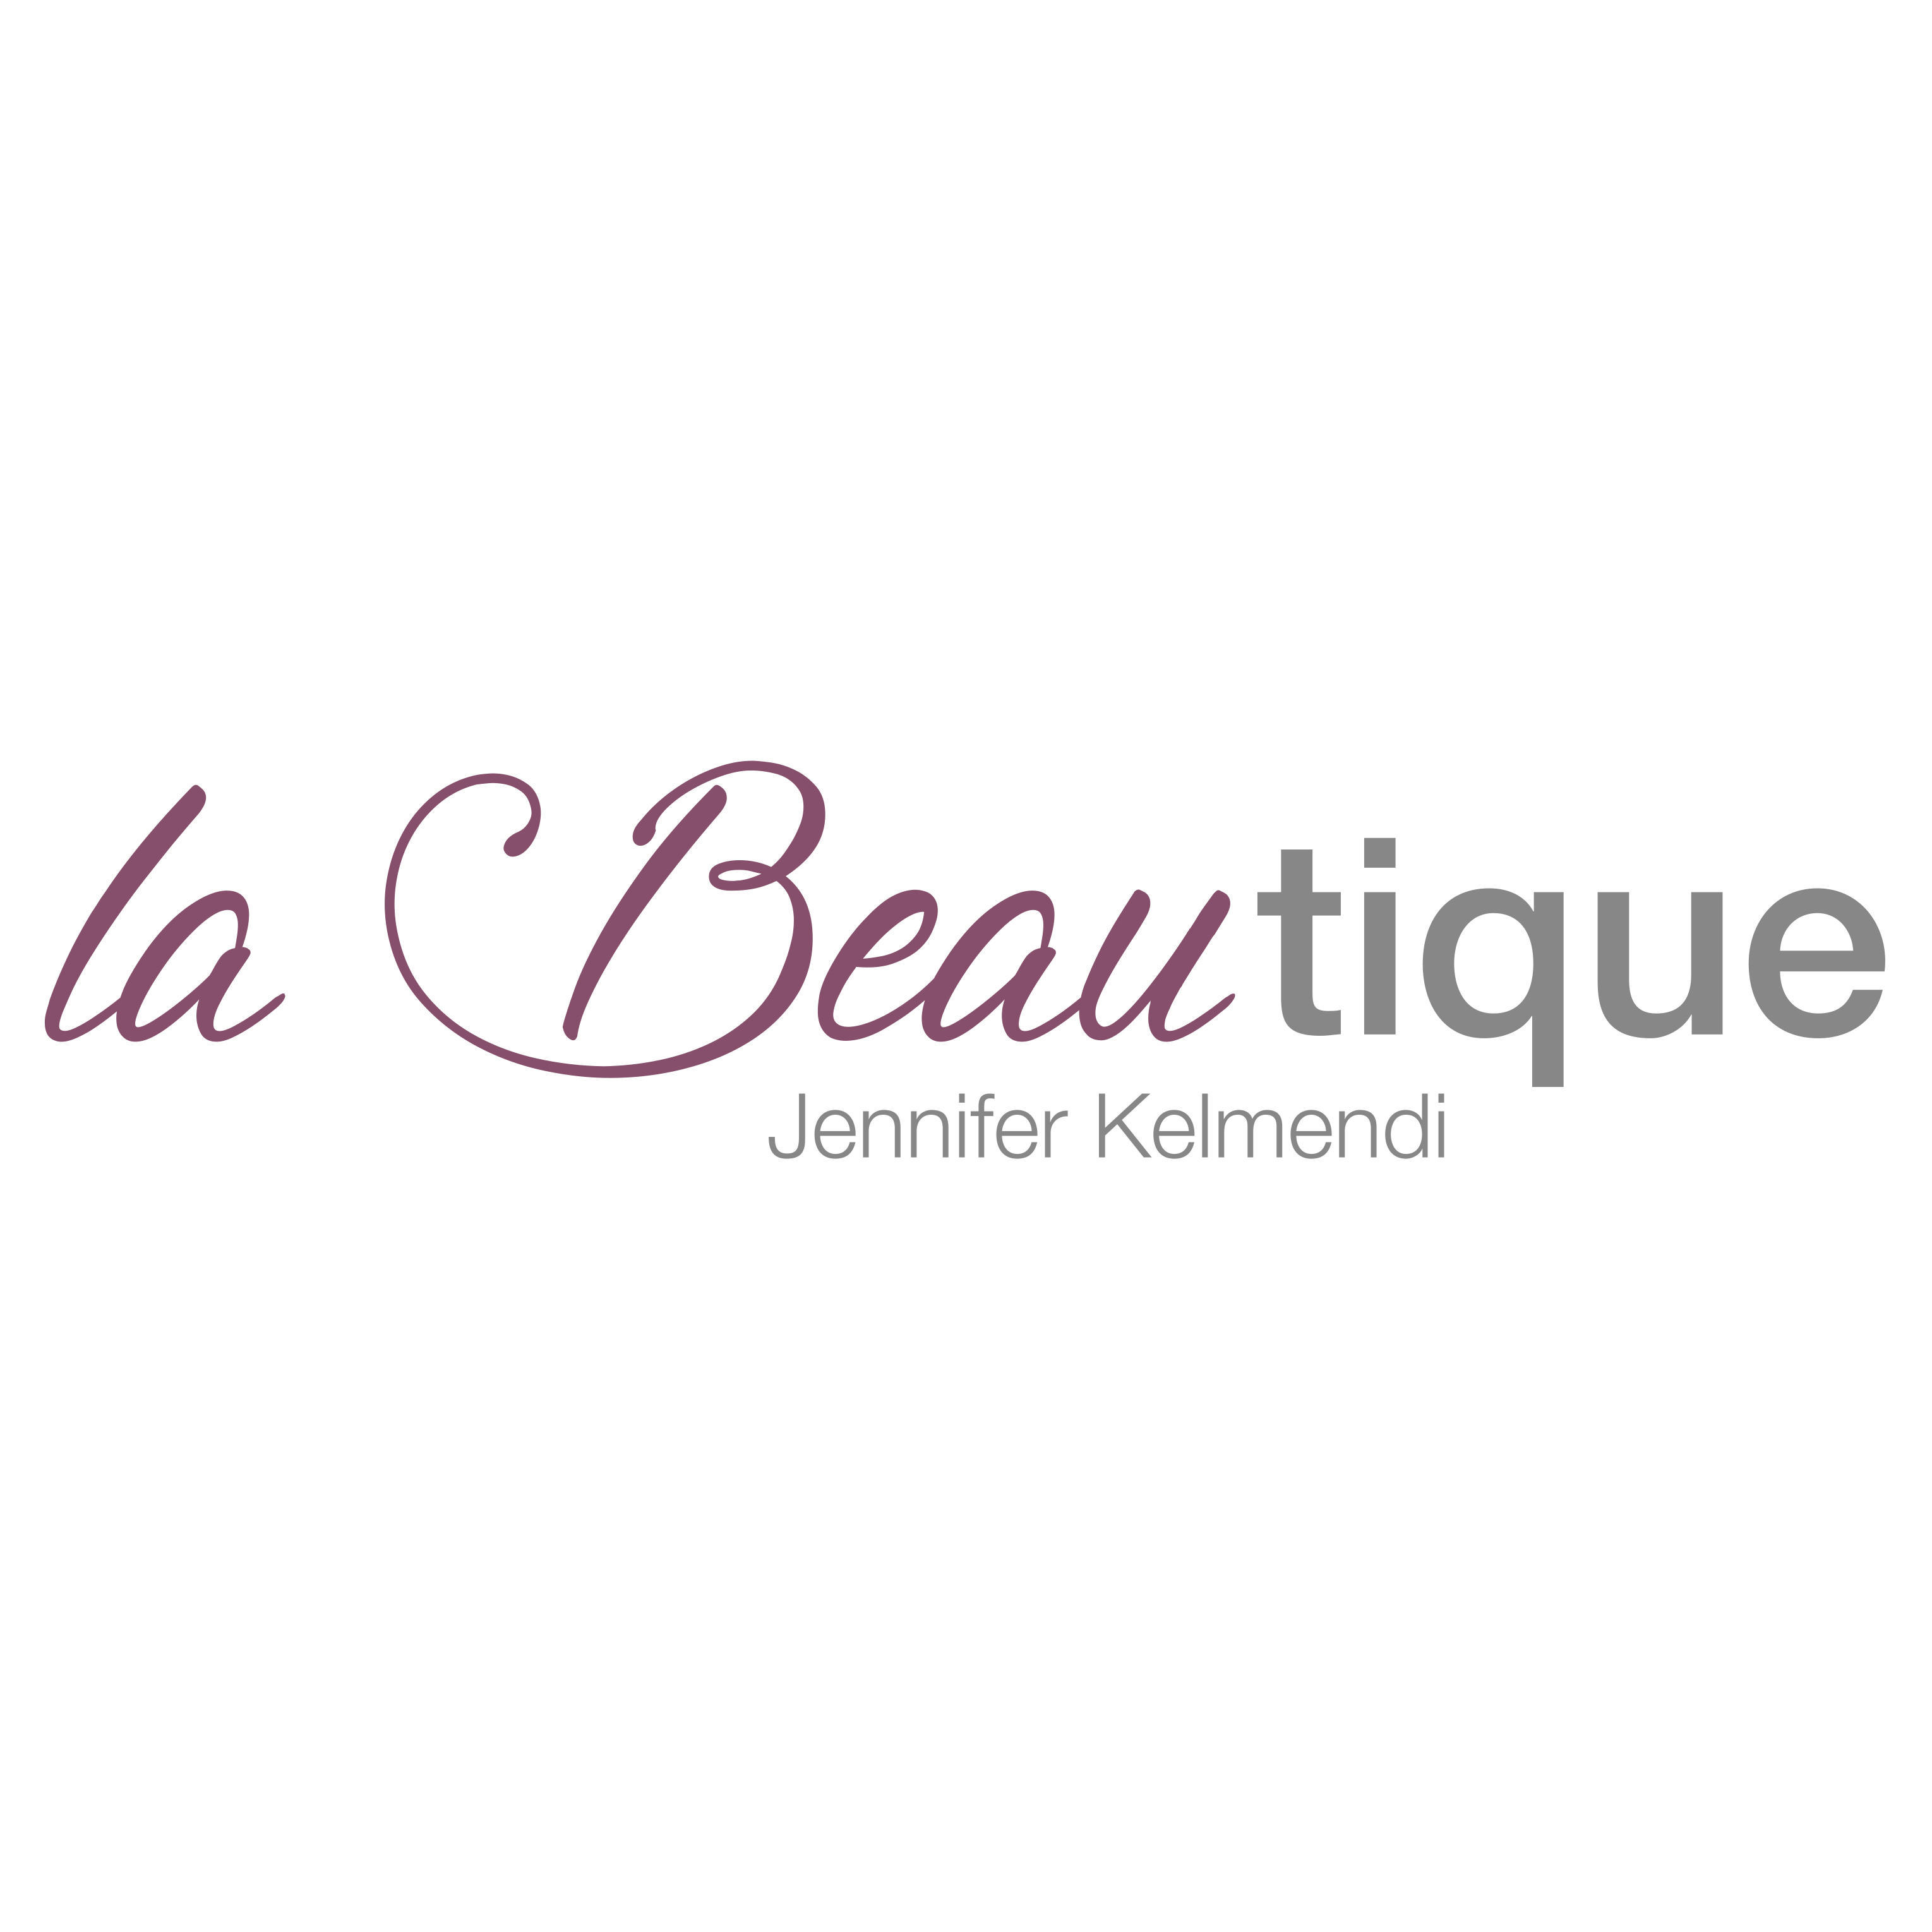 Jennifer Kelmendi la Beautique in Mülheim an der Ruhr - Logo